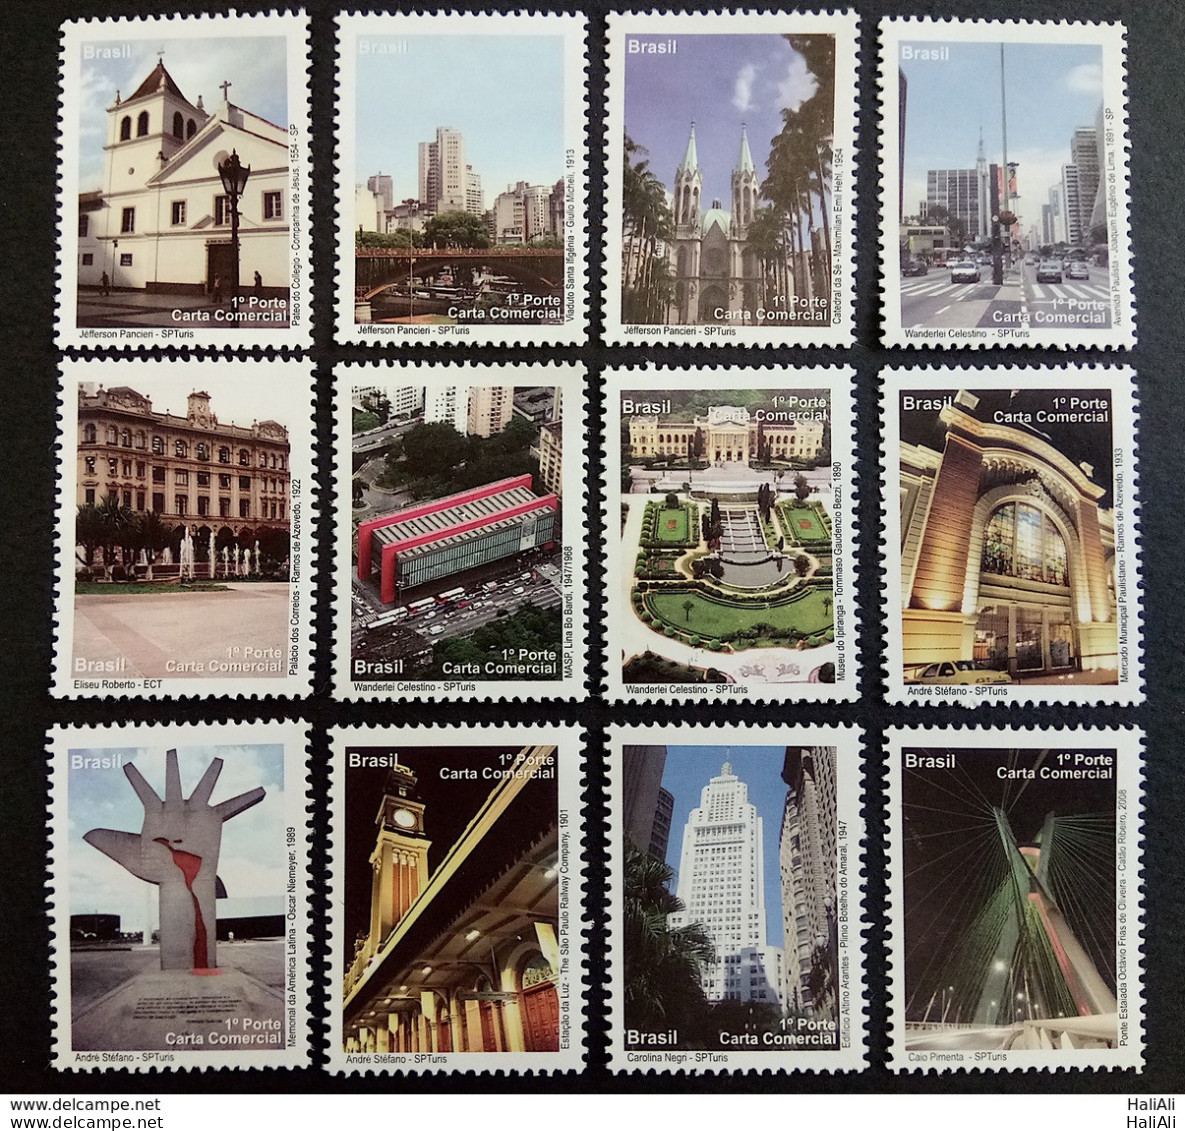 C 2885 Brazil Depersonalized Stamp Tourism Sao Paulo Church Bridge 2009 Vertical Complete Series - Personalizzati